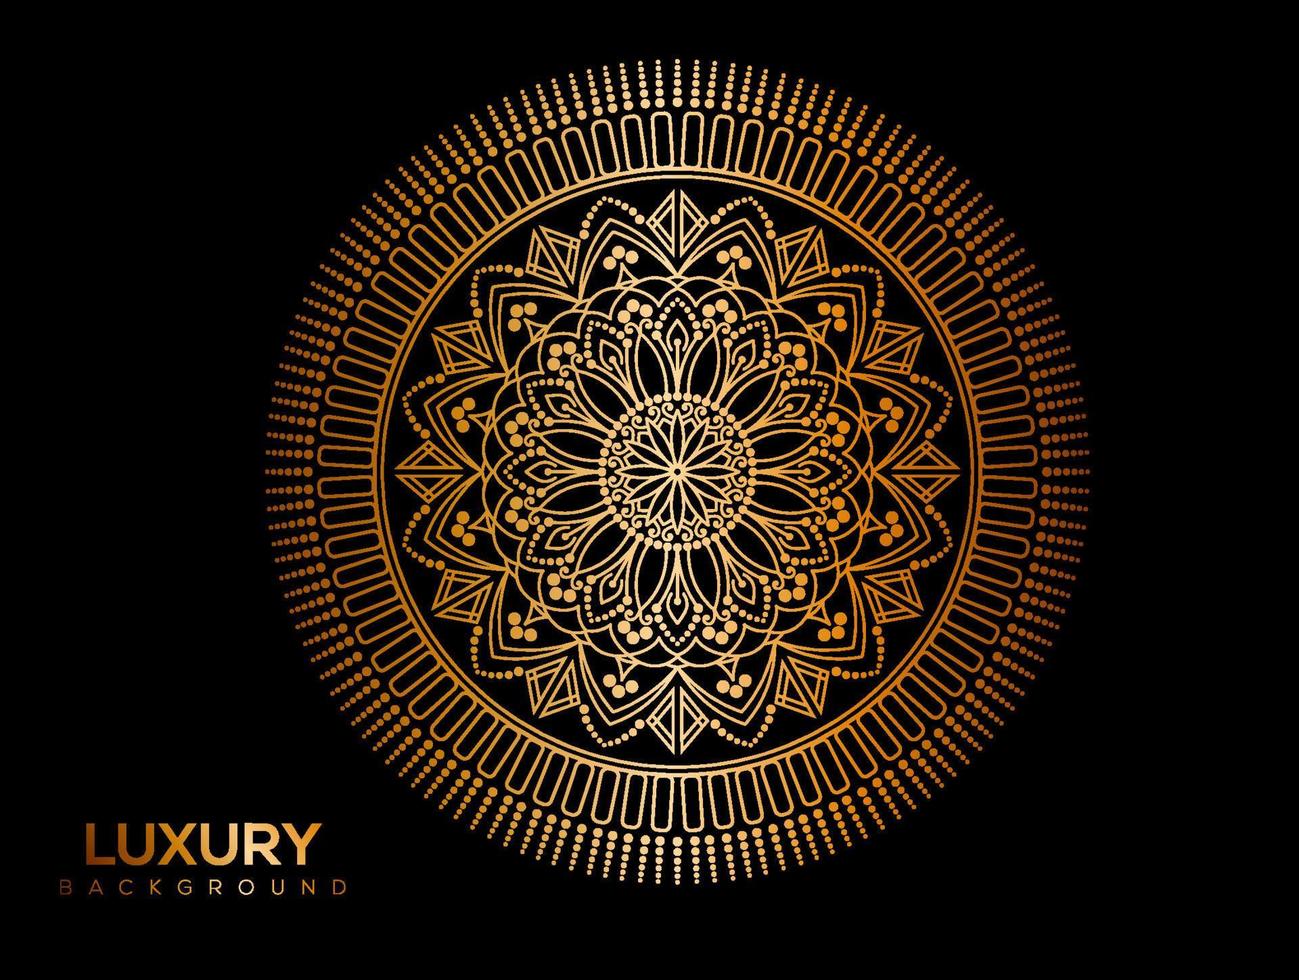 Luxus-Mandala-Hintergrund, dekorativer Hintergrund mit elegantem Mandala-Design vektor